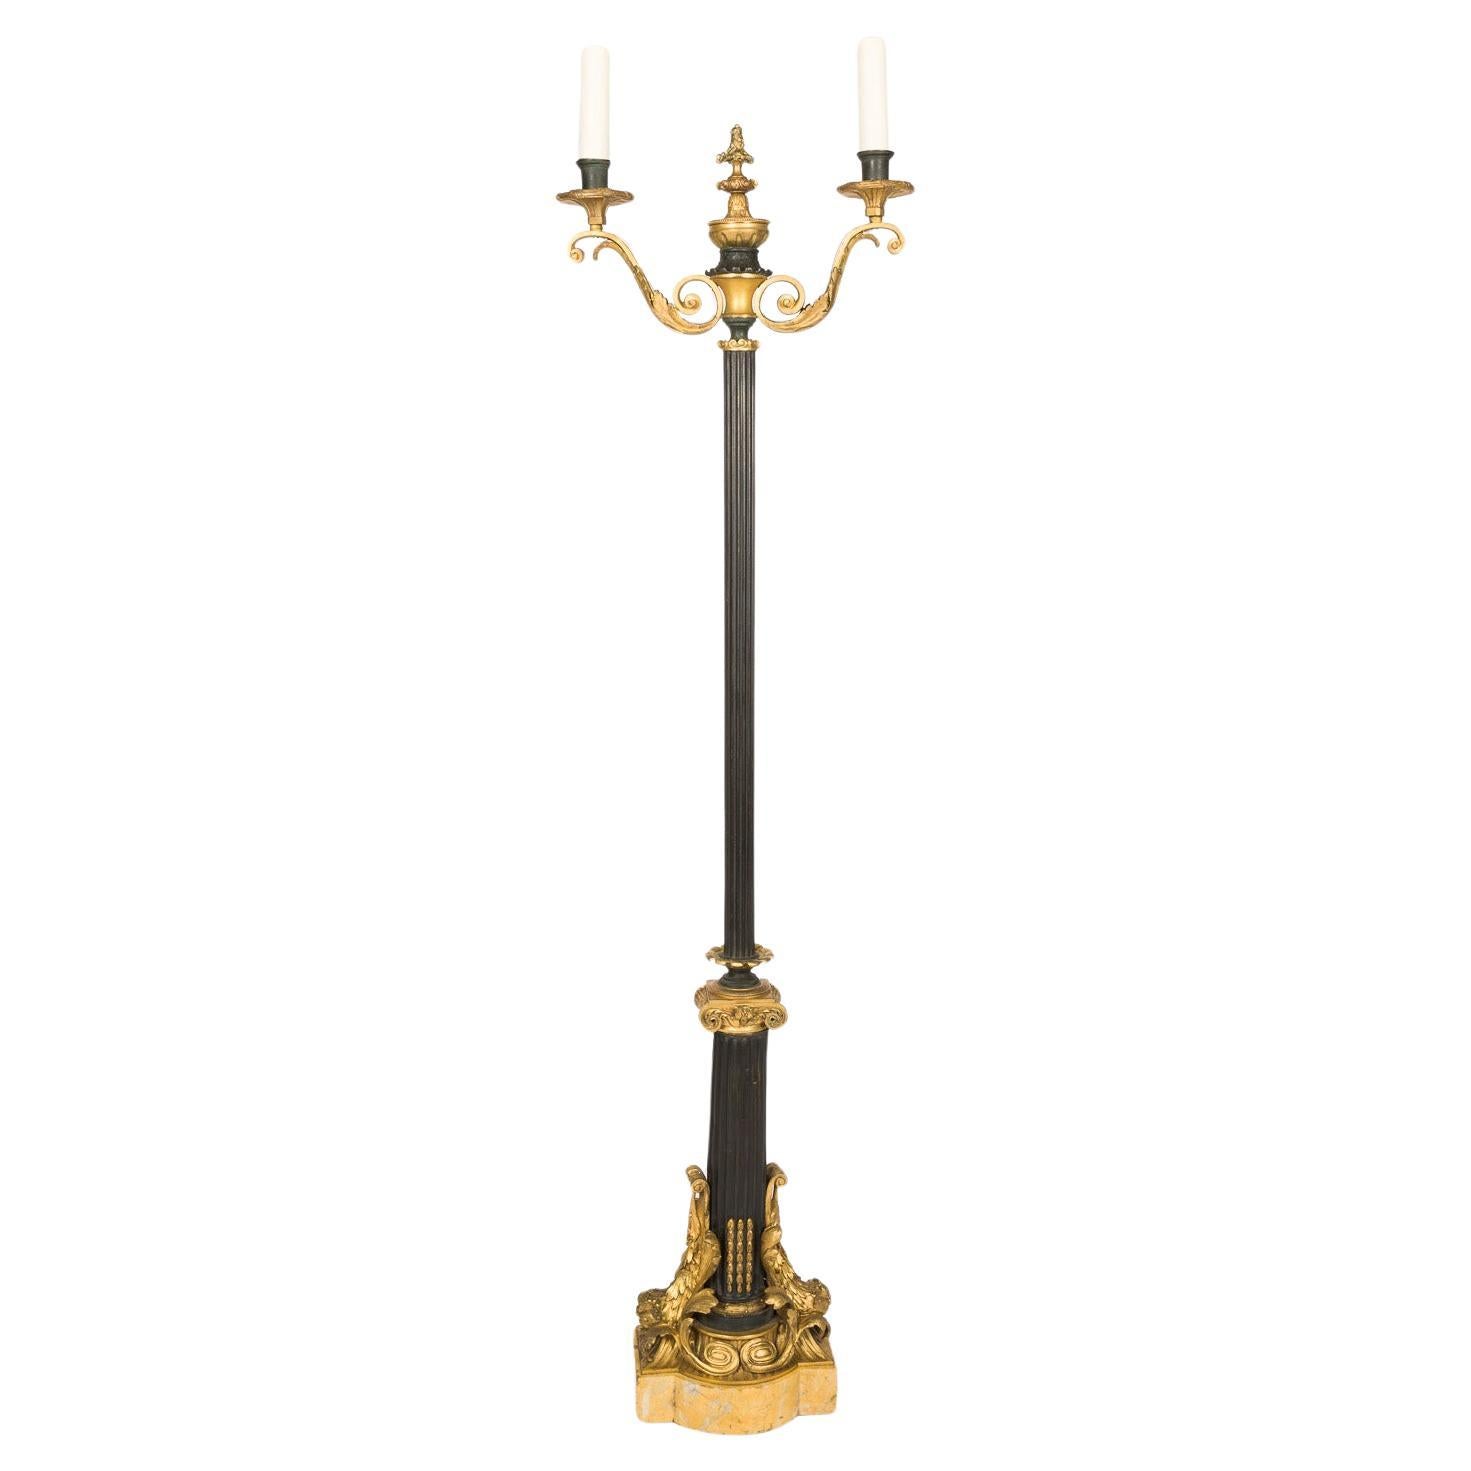 Neo-classical gilt bronze, tôle, & Siena marble twin arm standard lamp